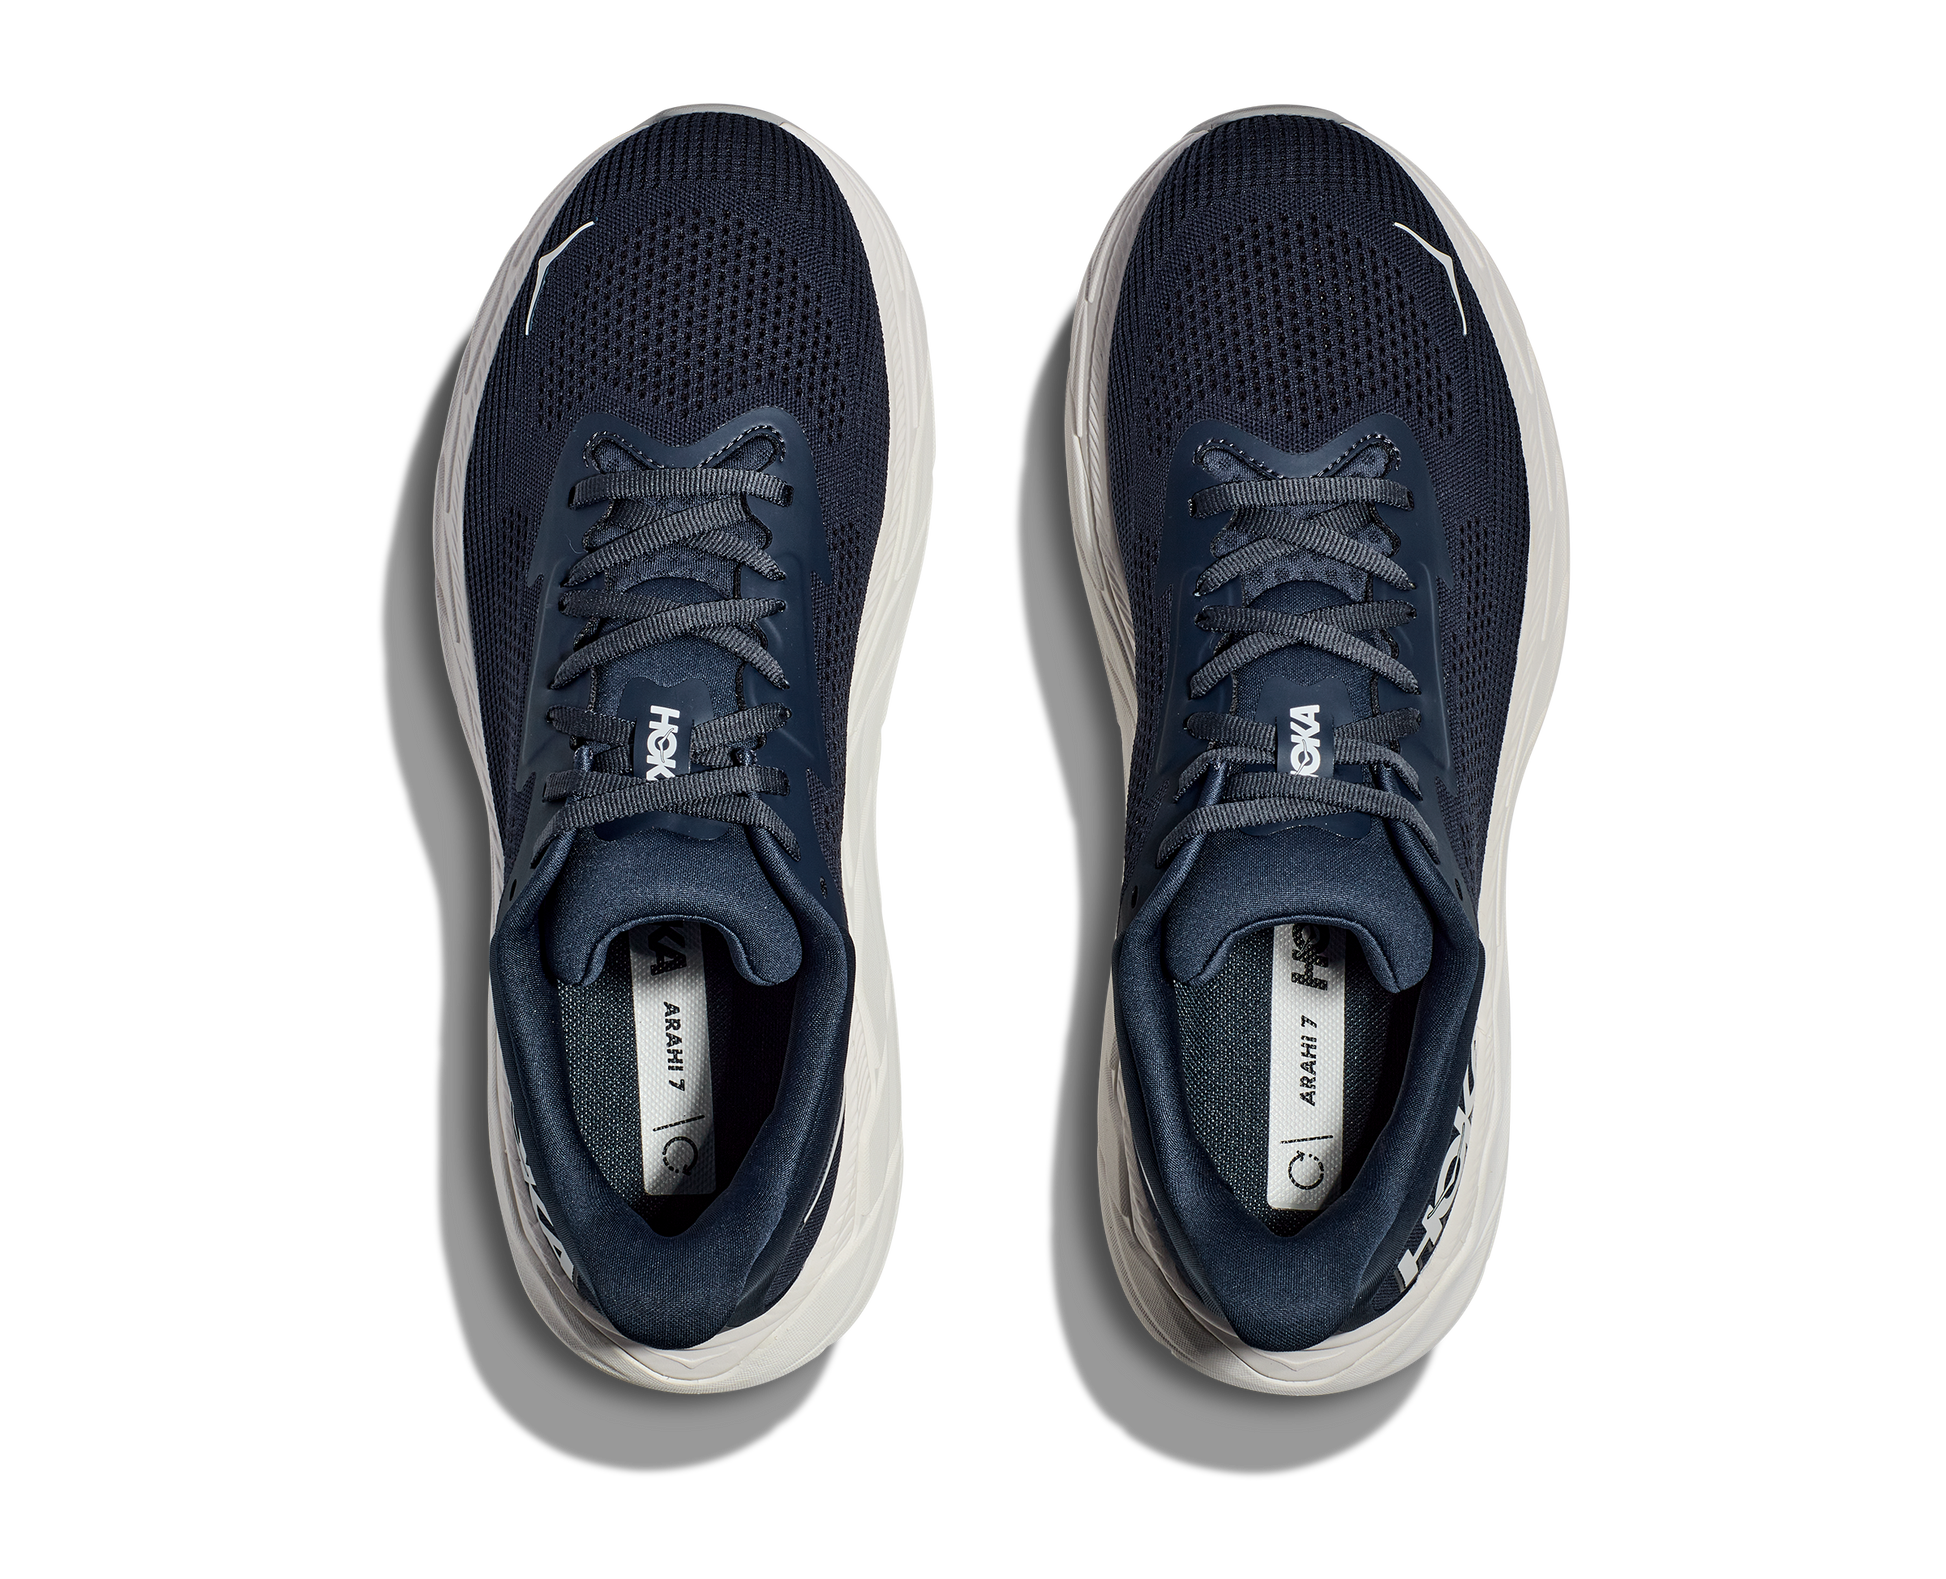 Hoka Arahi 7 Wide i herrmodell. Mörkblå stabil sko med vit sula. Hos Hoka specialisterna i Sverige.